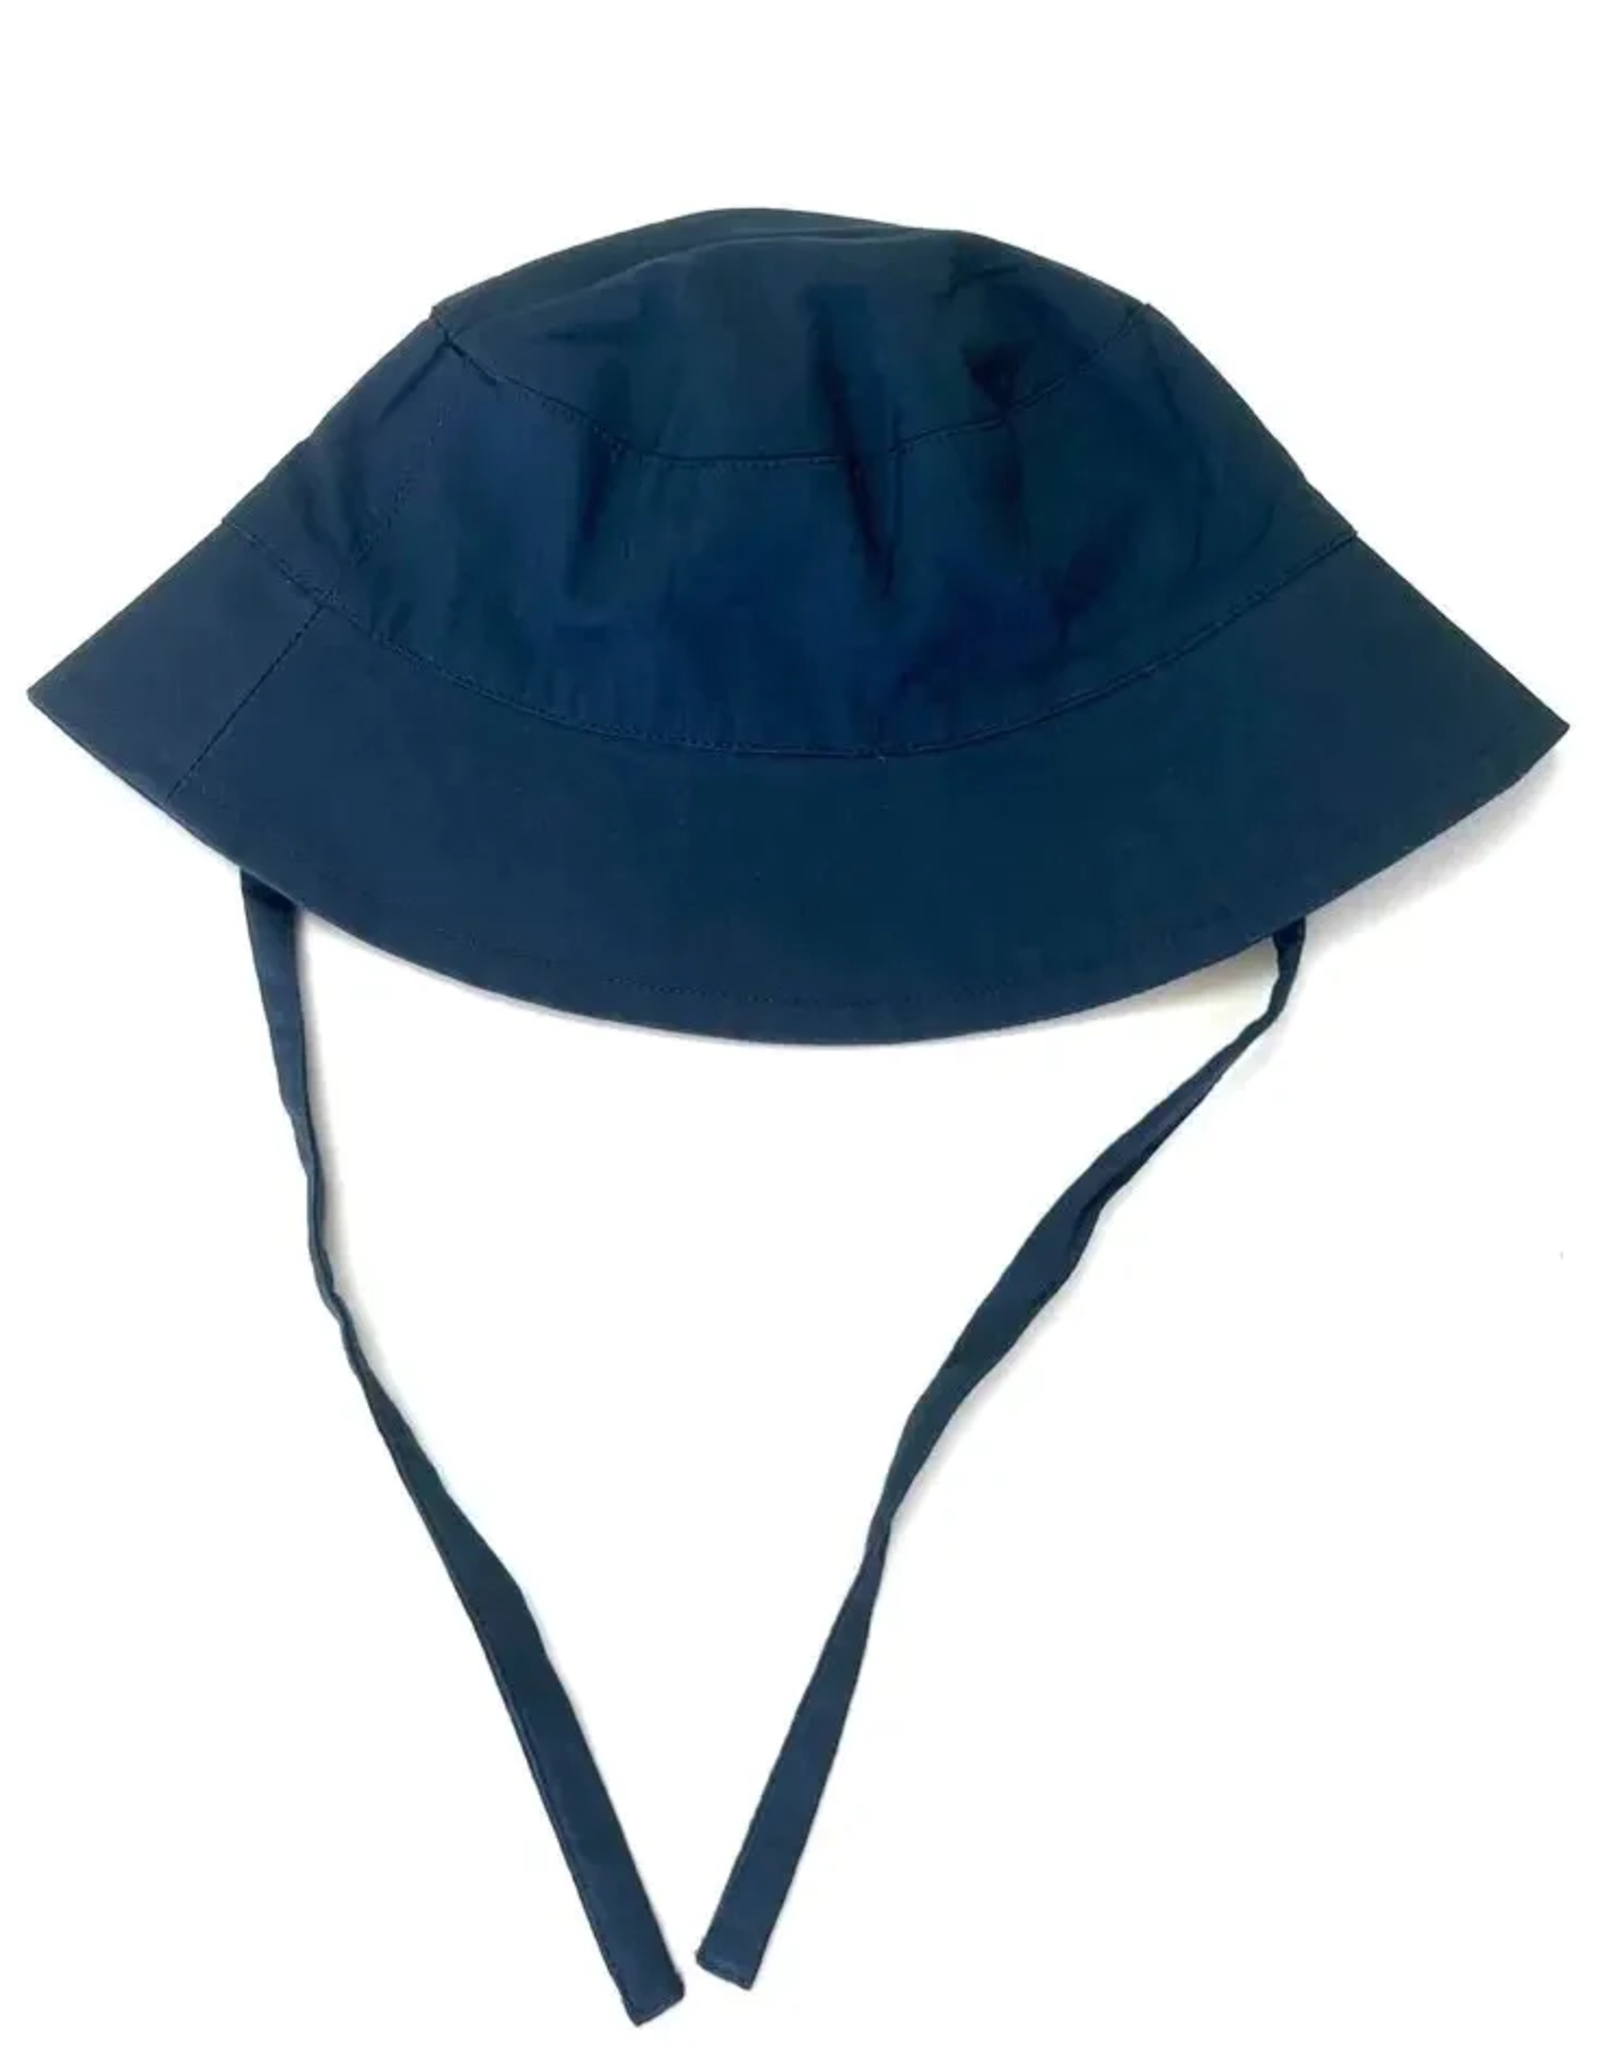 Viverano Sun Hat Navy